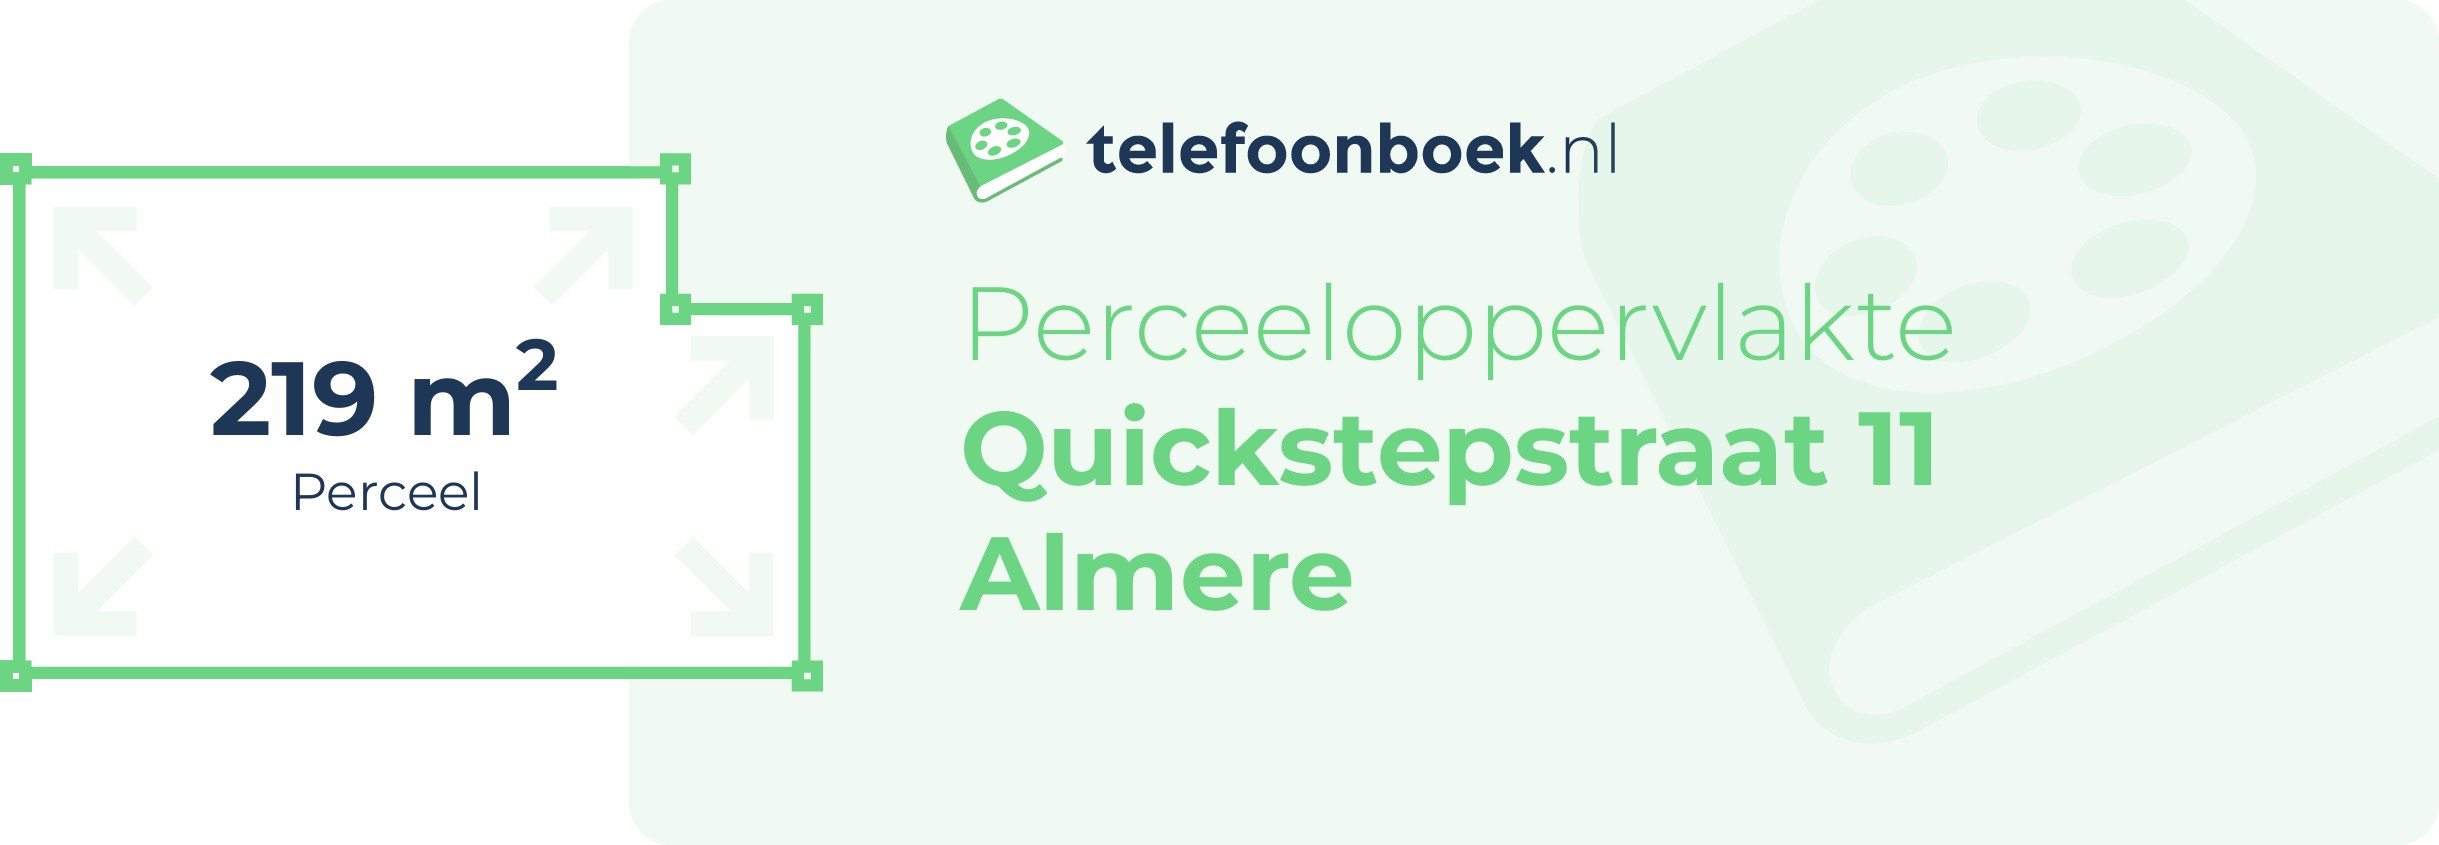 Perceeloppervlakte Quickstepstraat 11 Almere